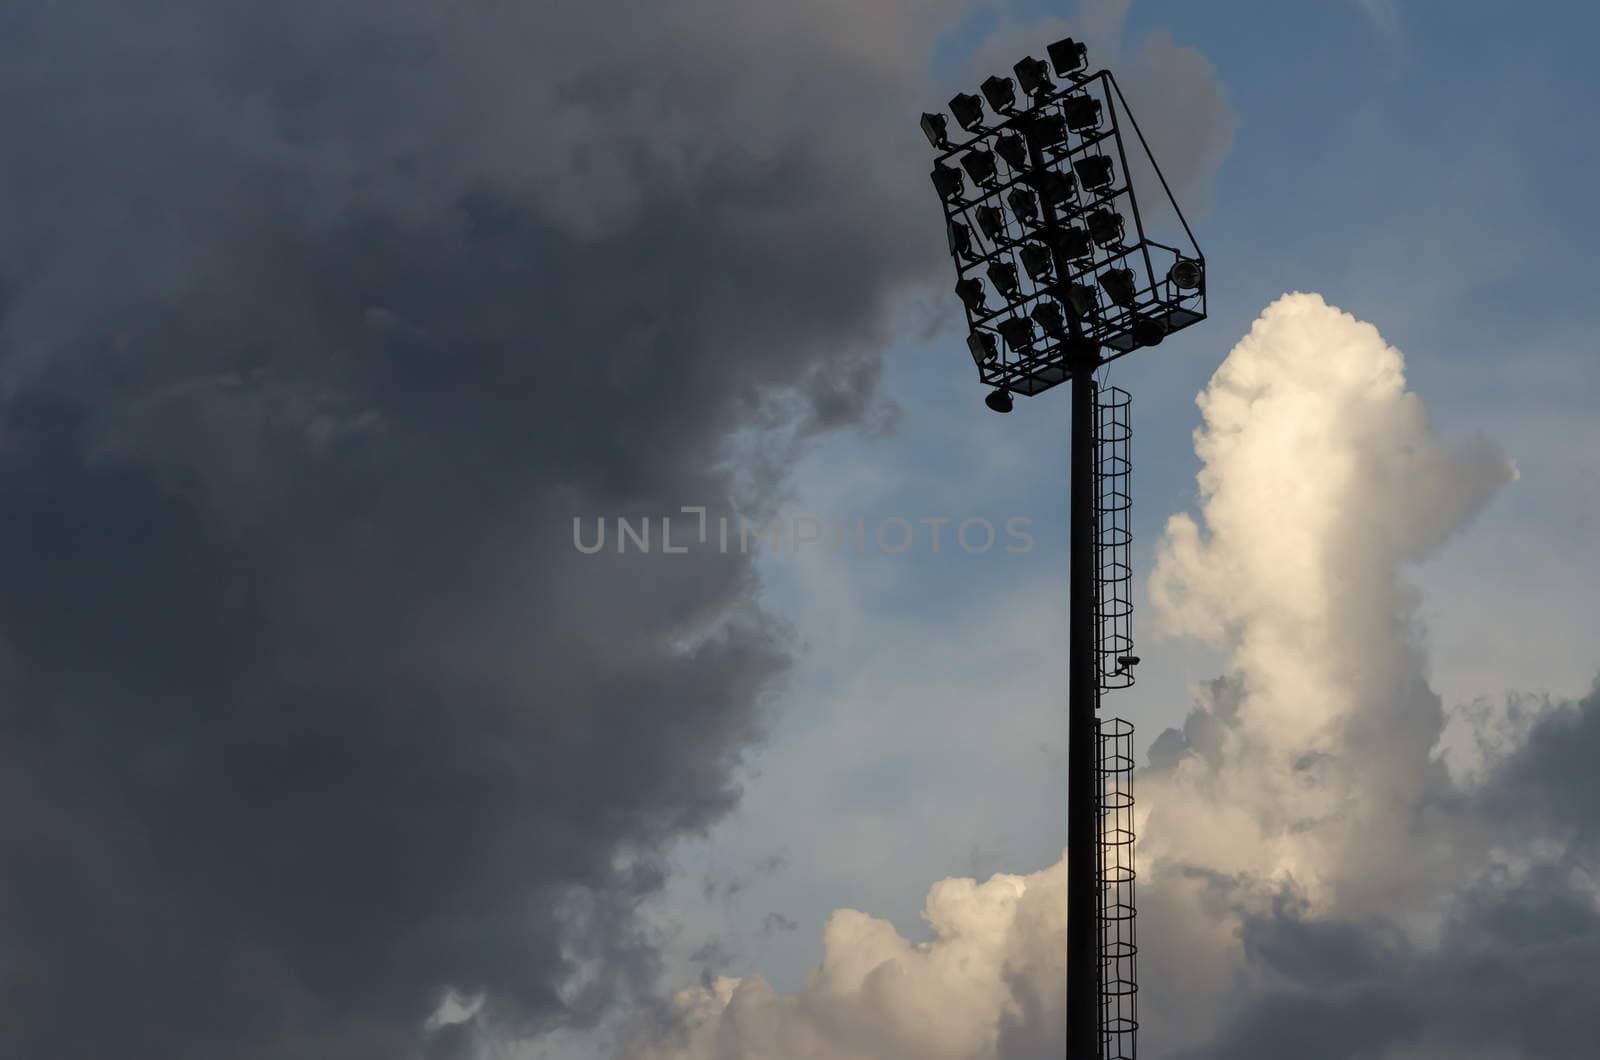 football Stadium Lights under the blue sky